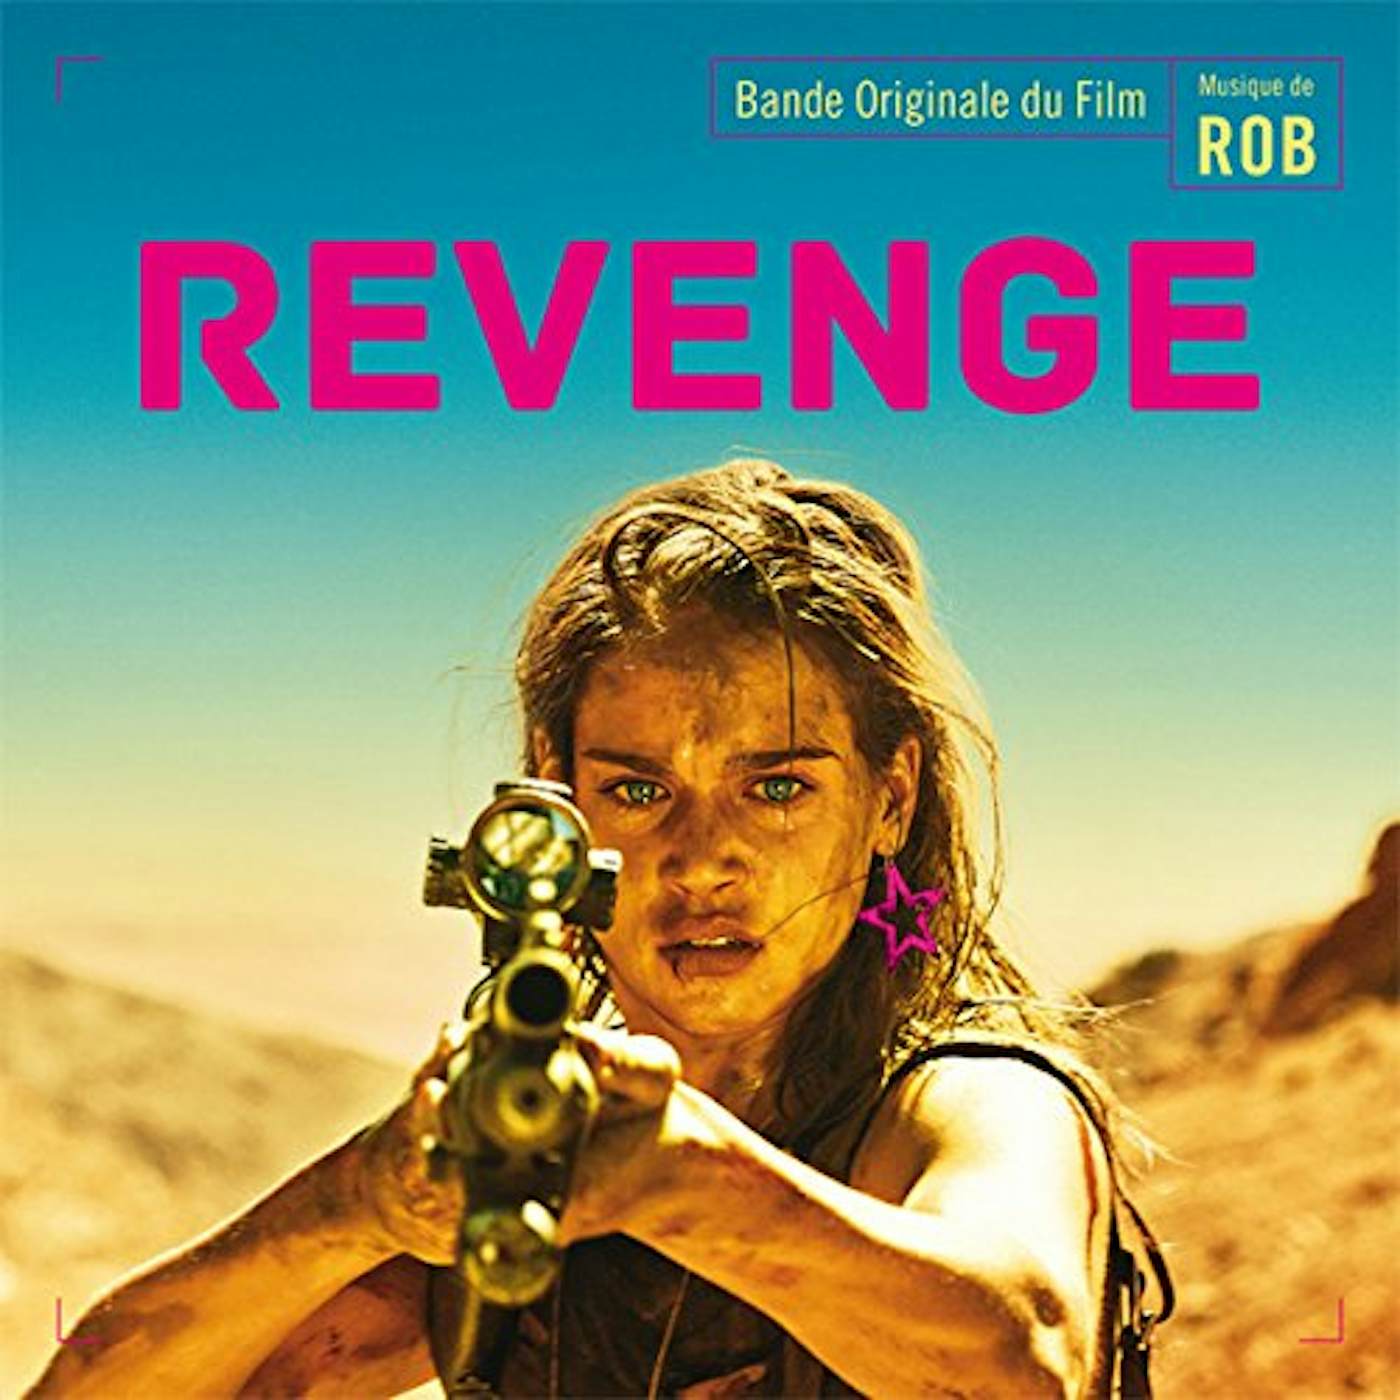 Rob REVENGE / Original Soundtrack CD